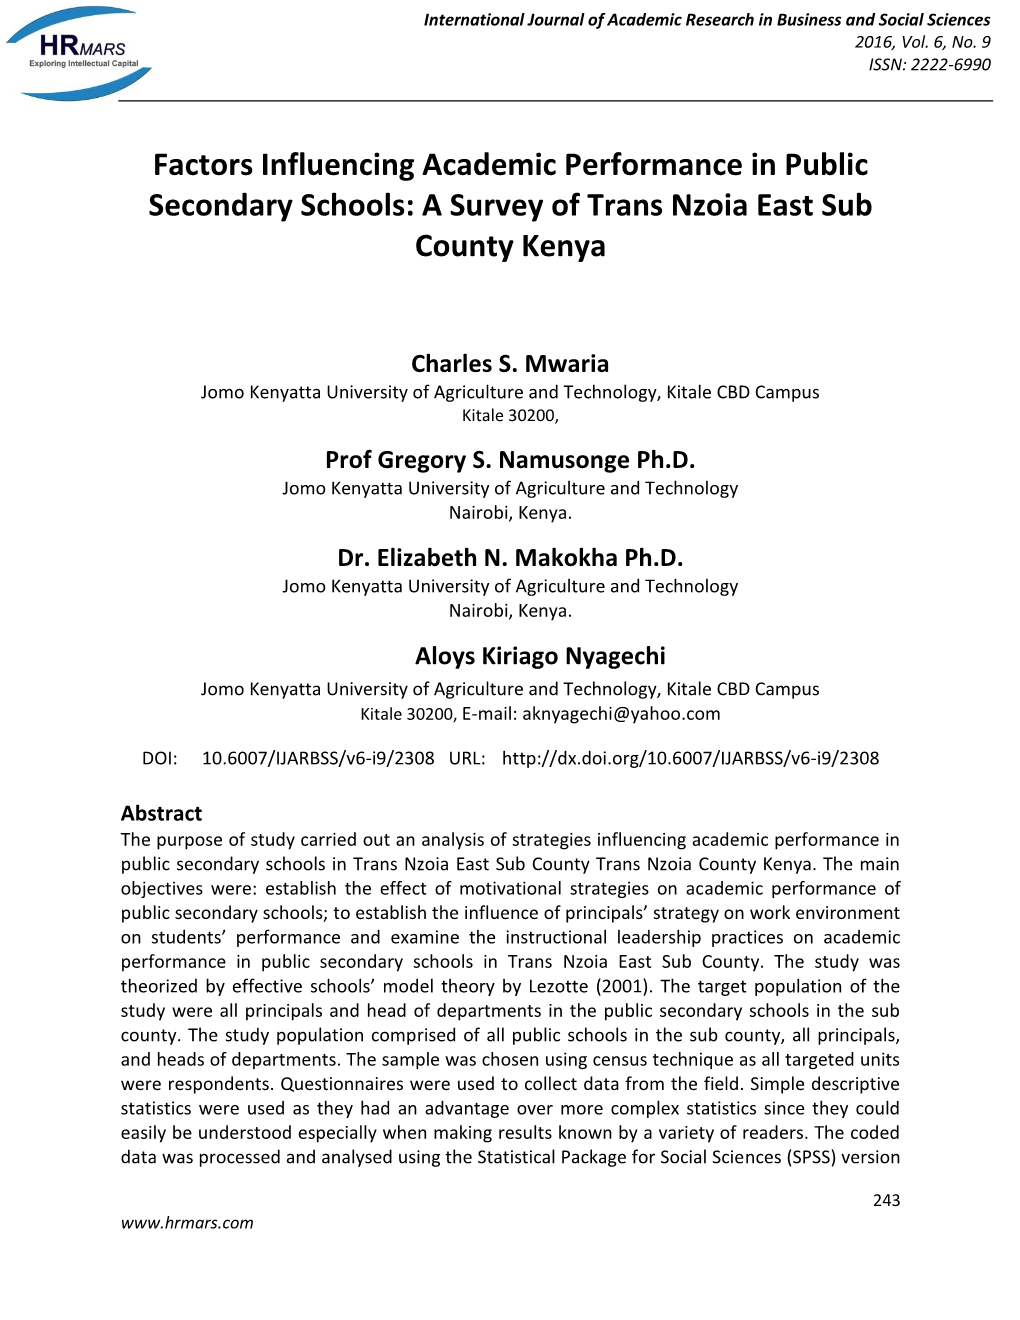 Factors Influencing Academic Performance in Public Secondary Schools: a Survey of Trans Nzoia East Sub County Kenya